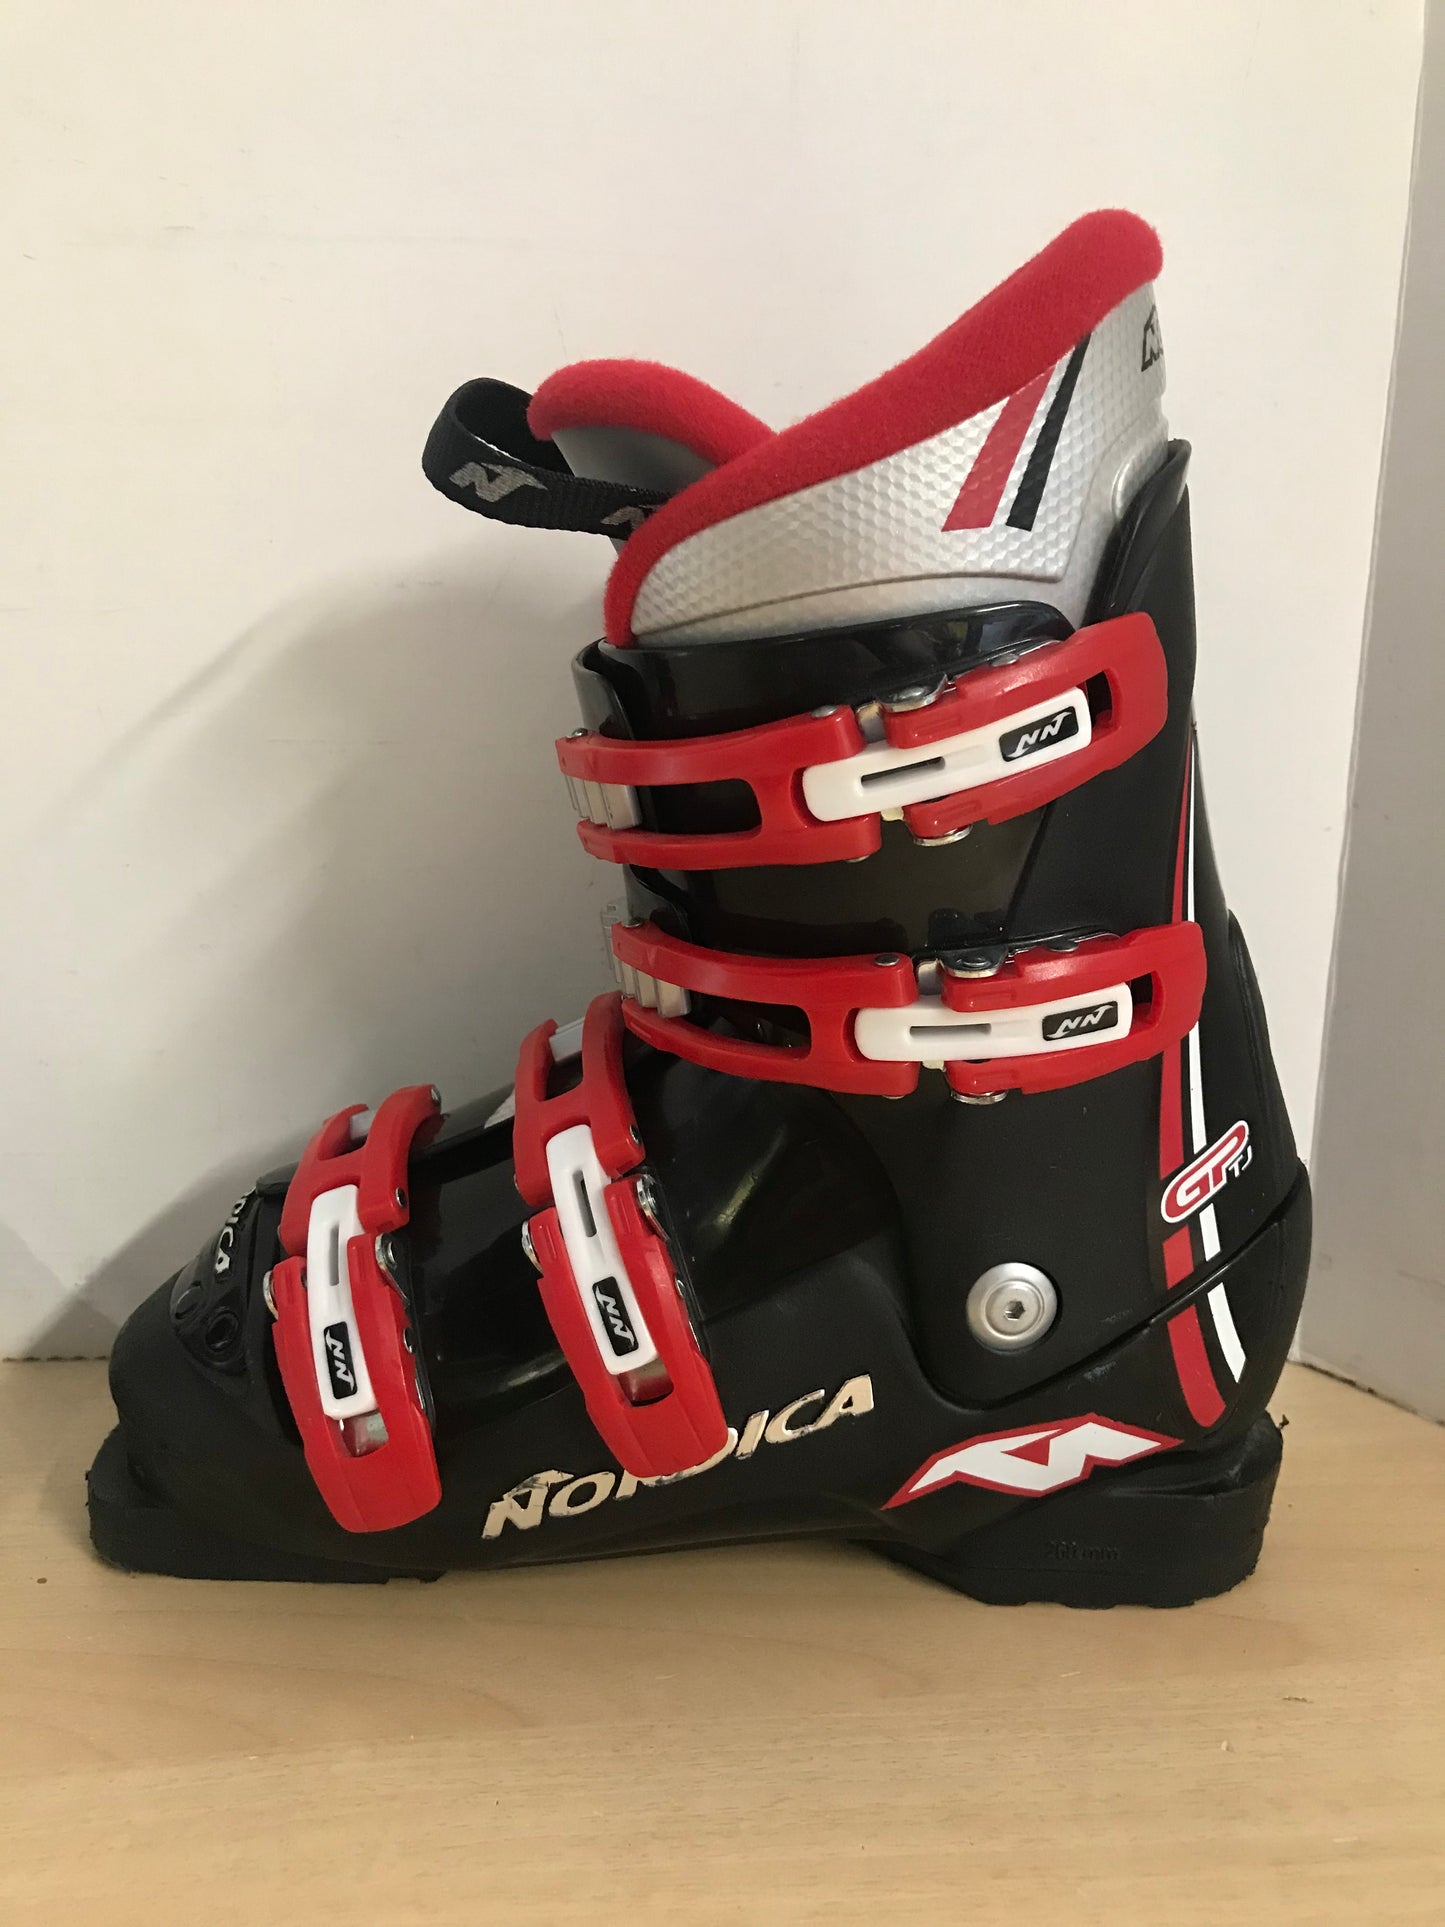 Ski Boots Mondo Size 22.5 Child Size 4.5 Shoe Size 260 mm Nordica Black Red White Excellent